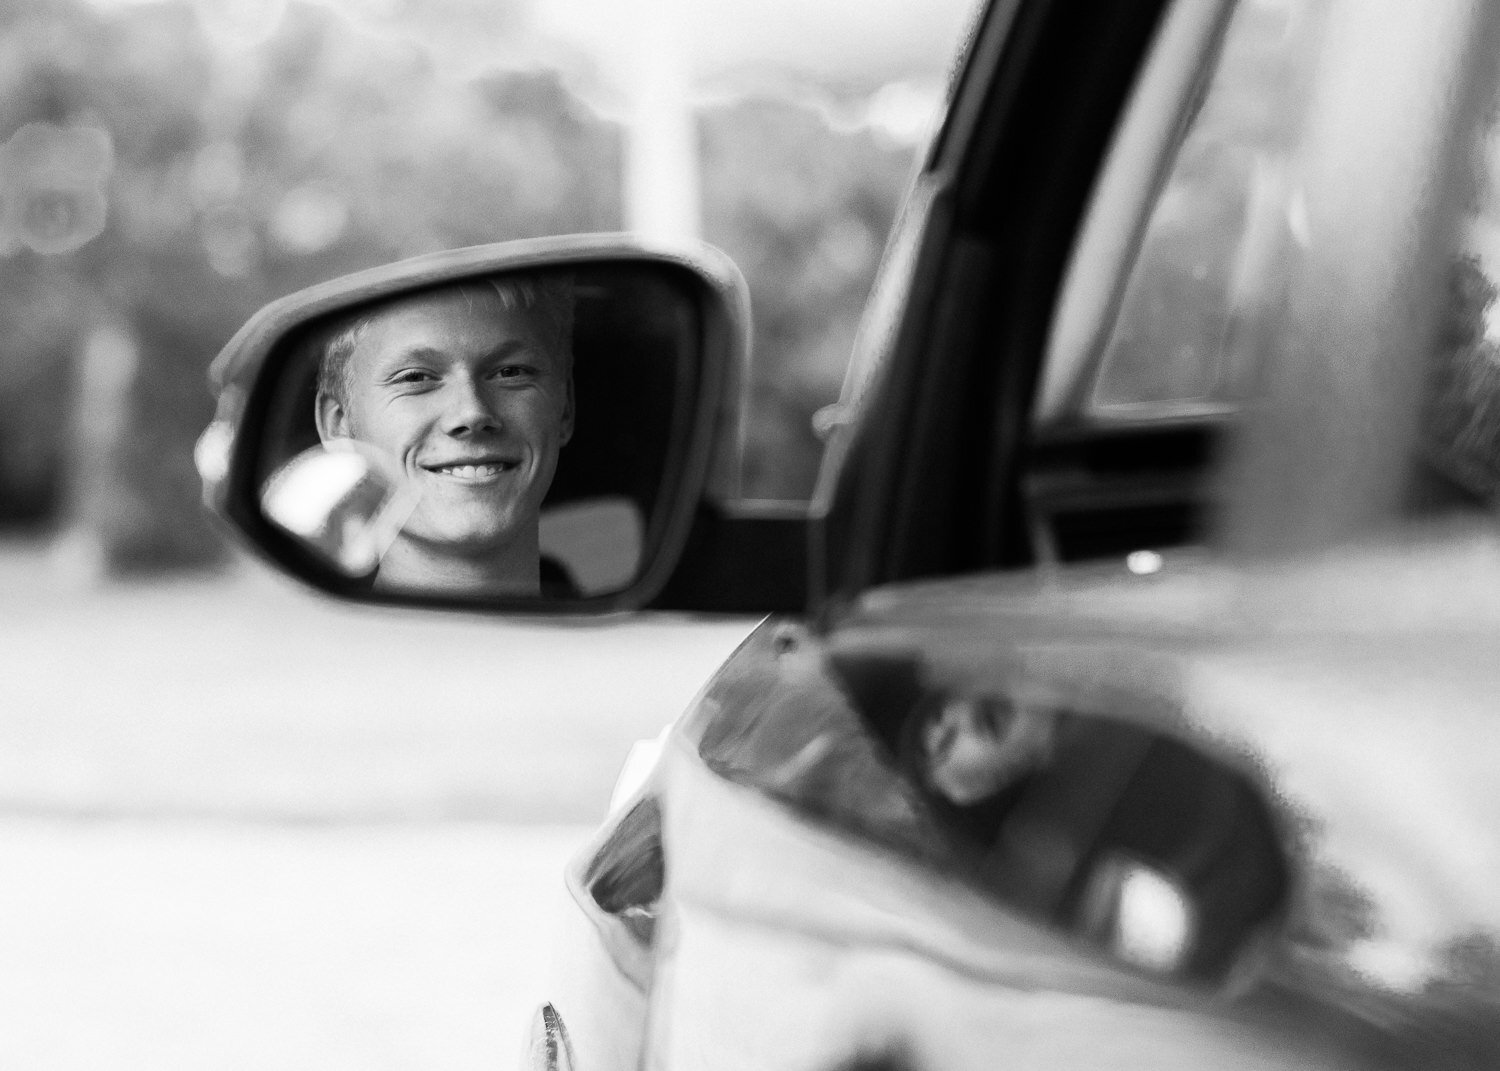 Senior boy in rear view mirror